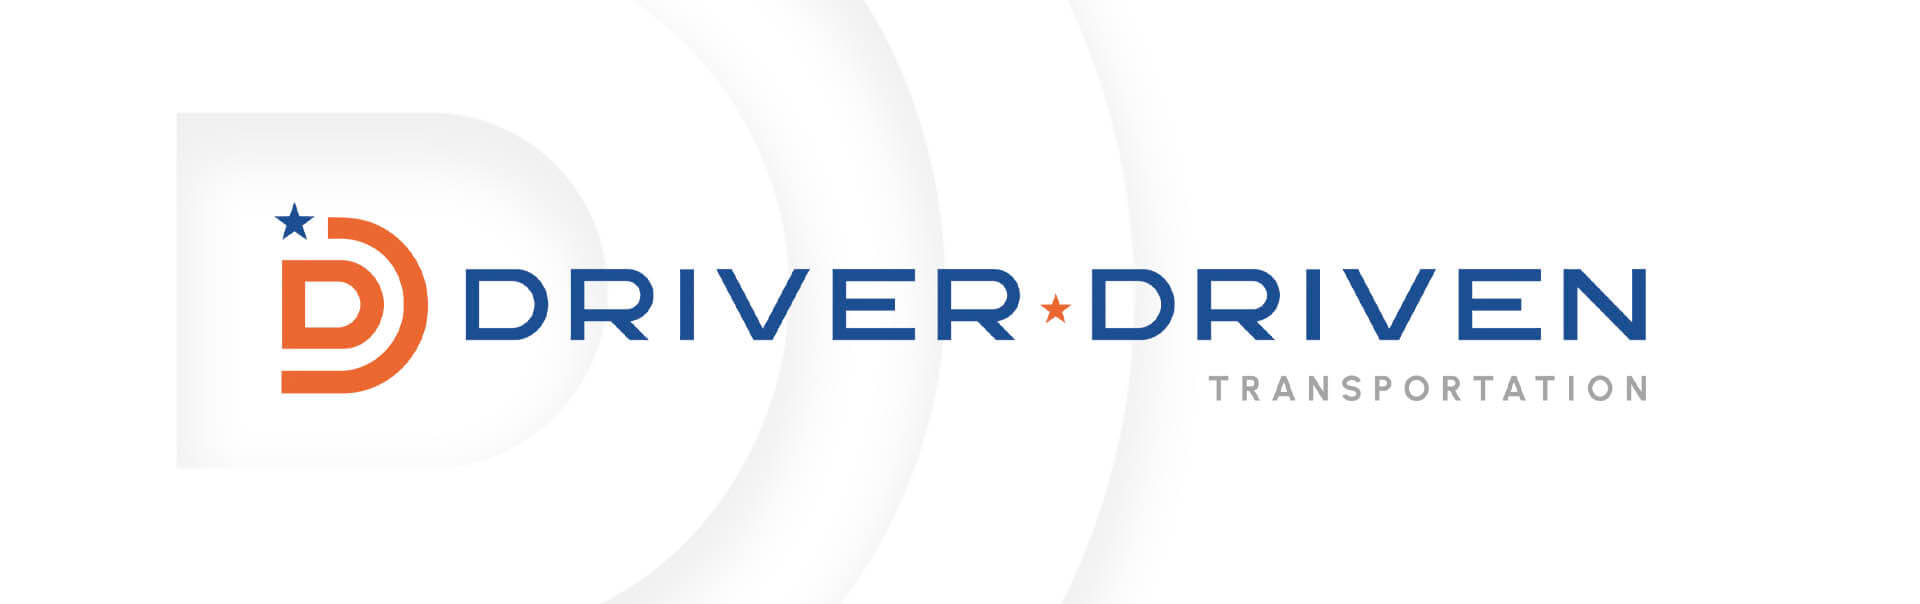 Driver Driven Transportation Brand Project